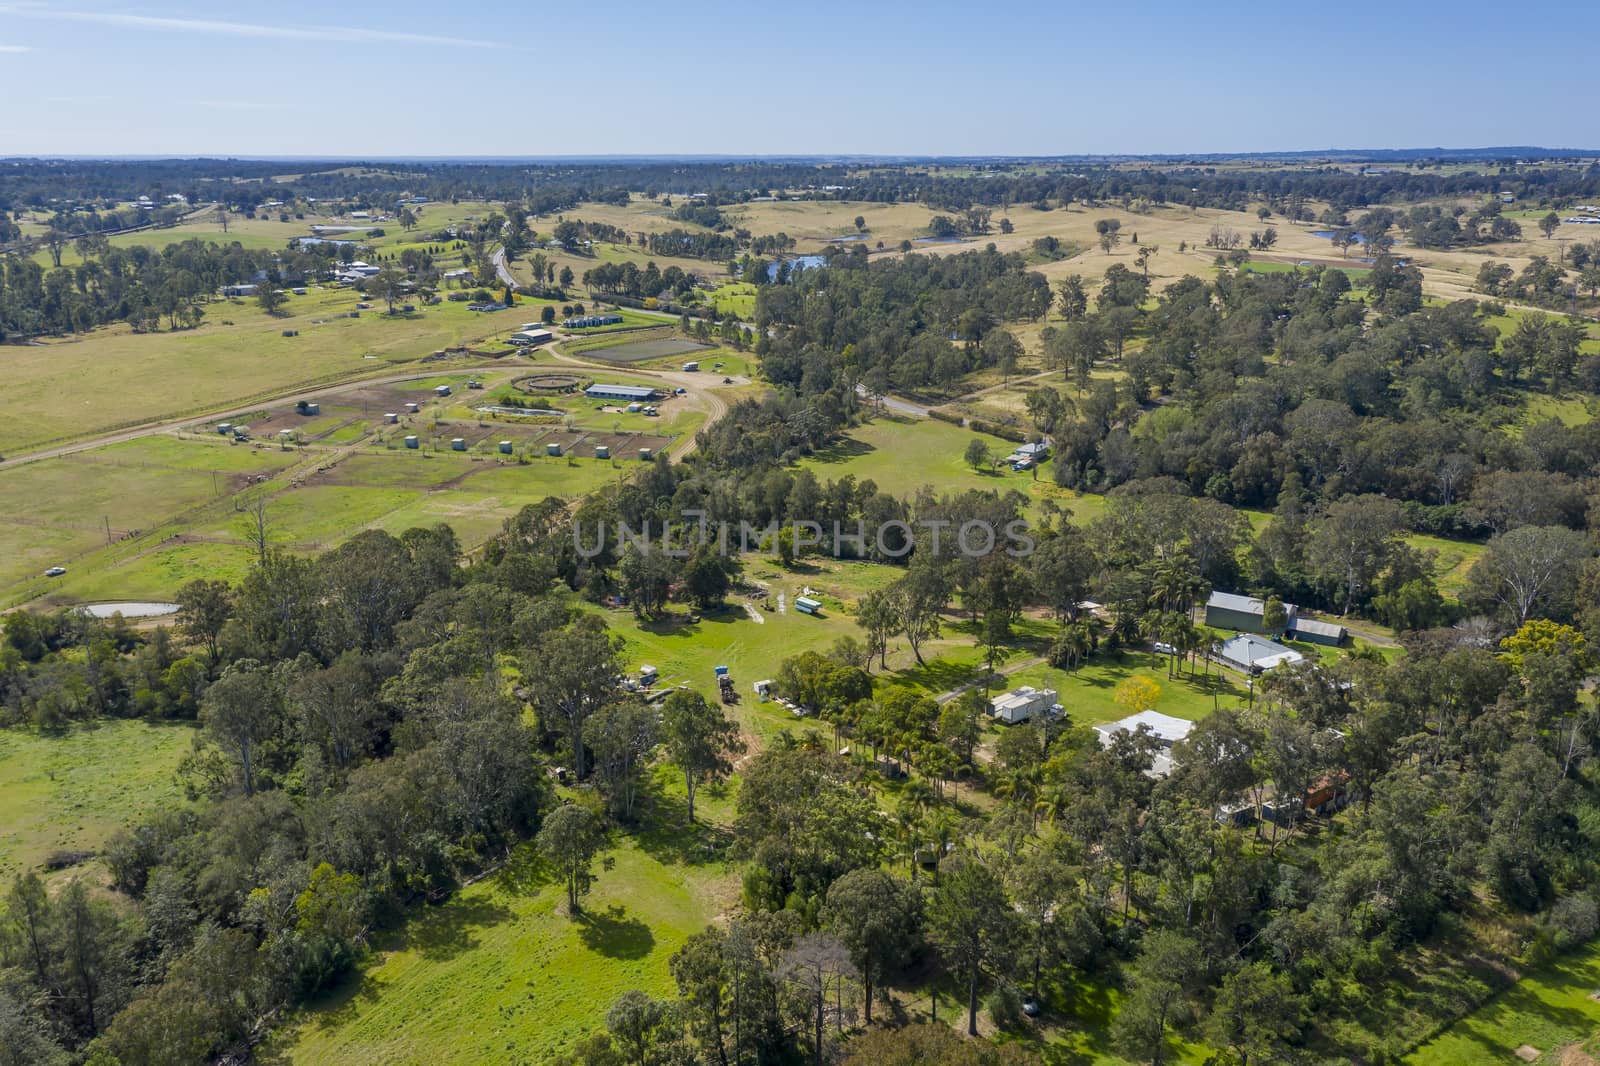 Farmland near Wallacia in Wollondilly Shire in regional New South Wales in Australia